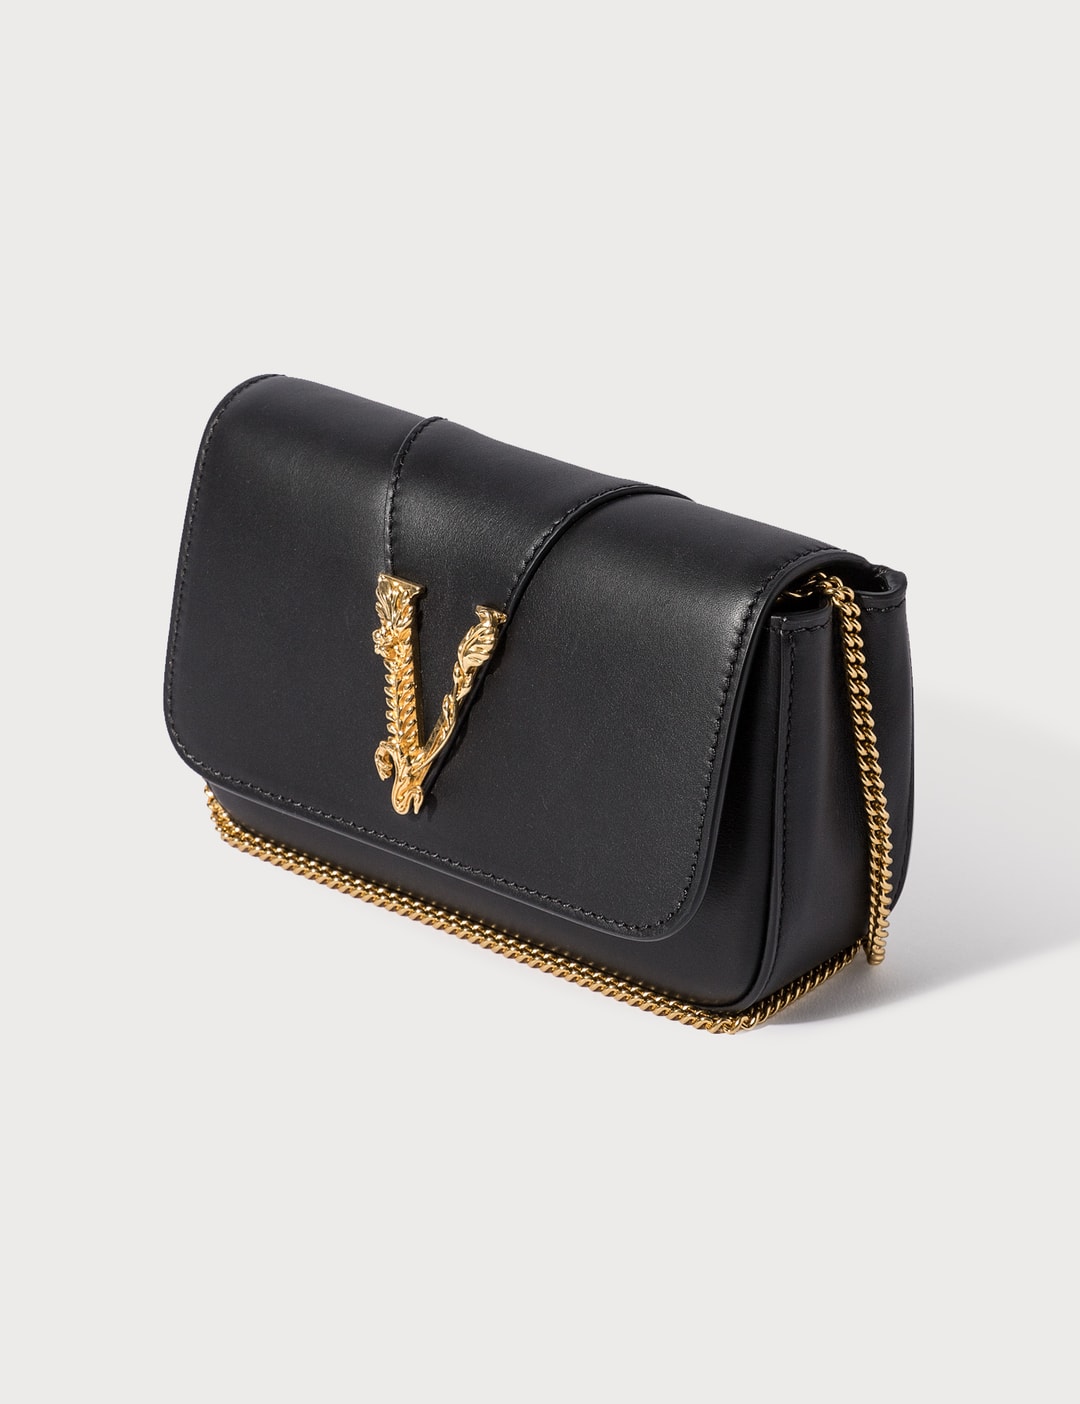 Versace Virtus Evening Bag in Black